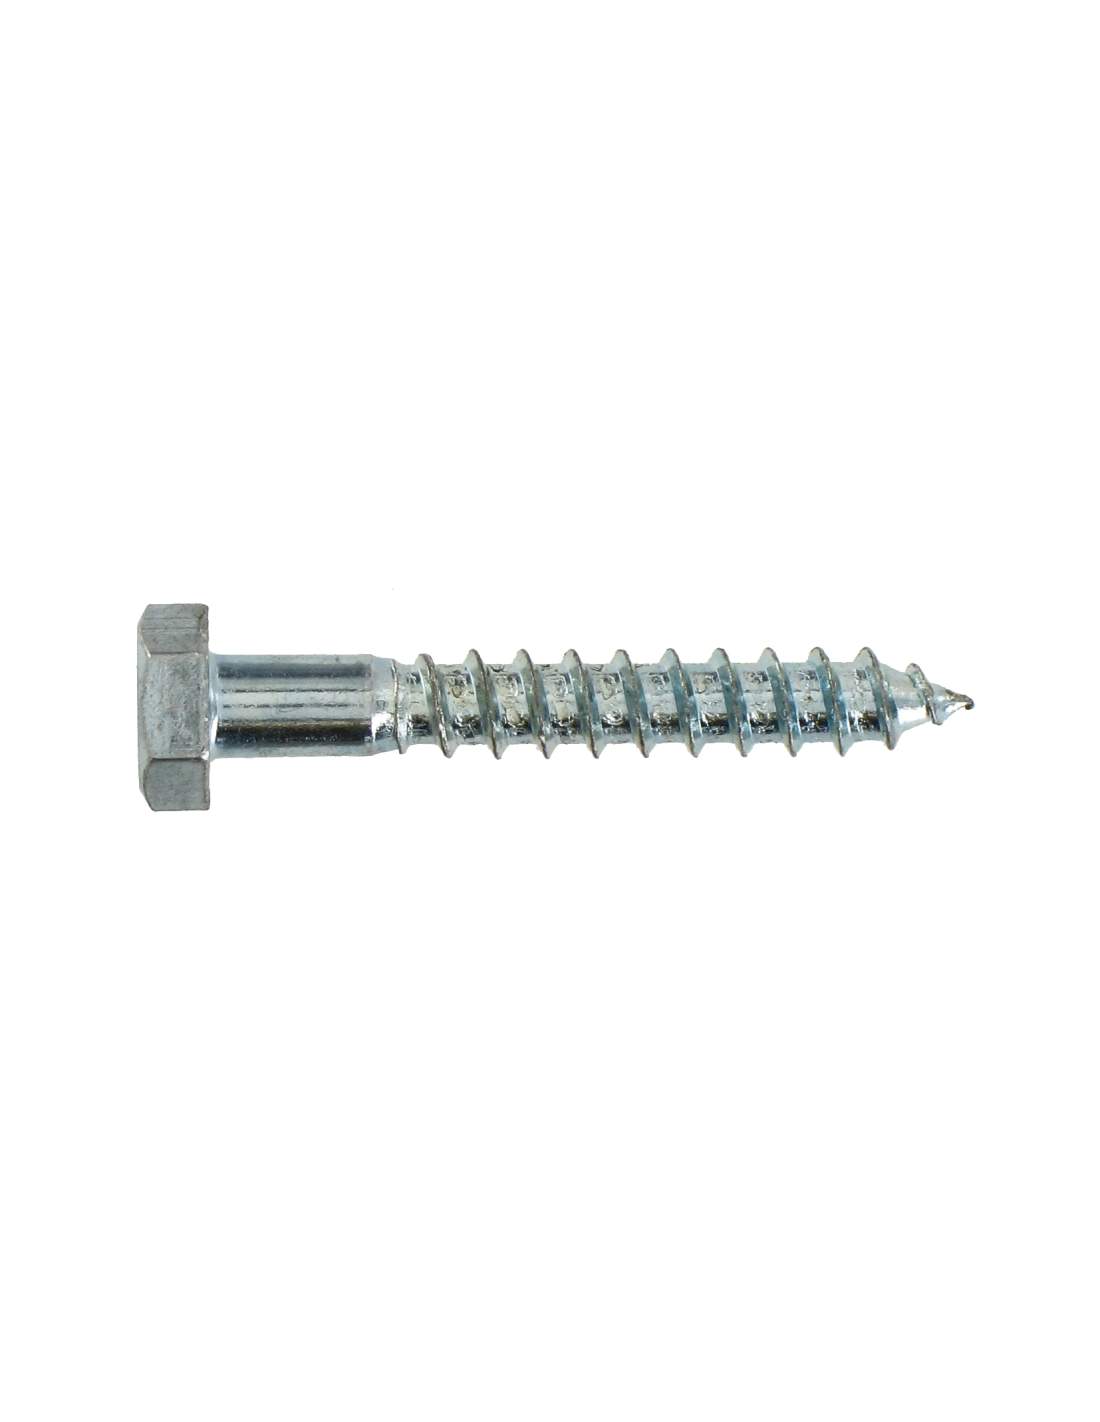 Zinc-plated steel lag bolt 10x60, 2 pieces.